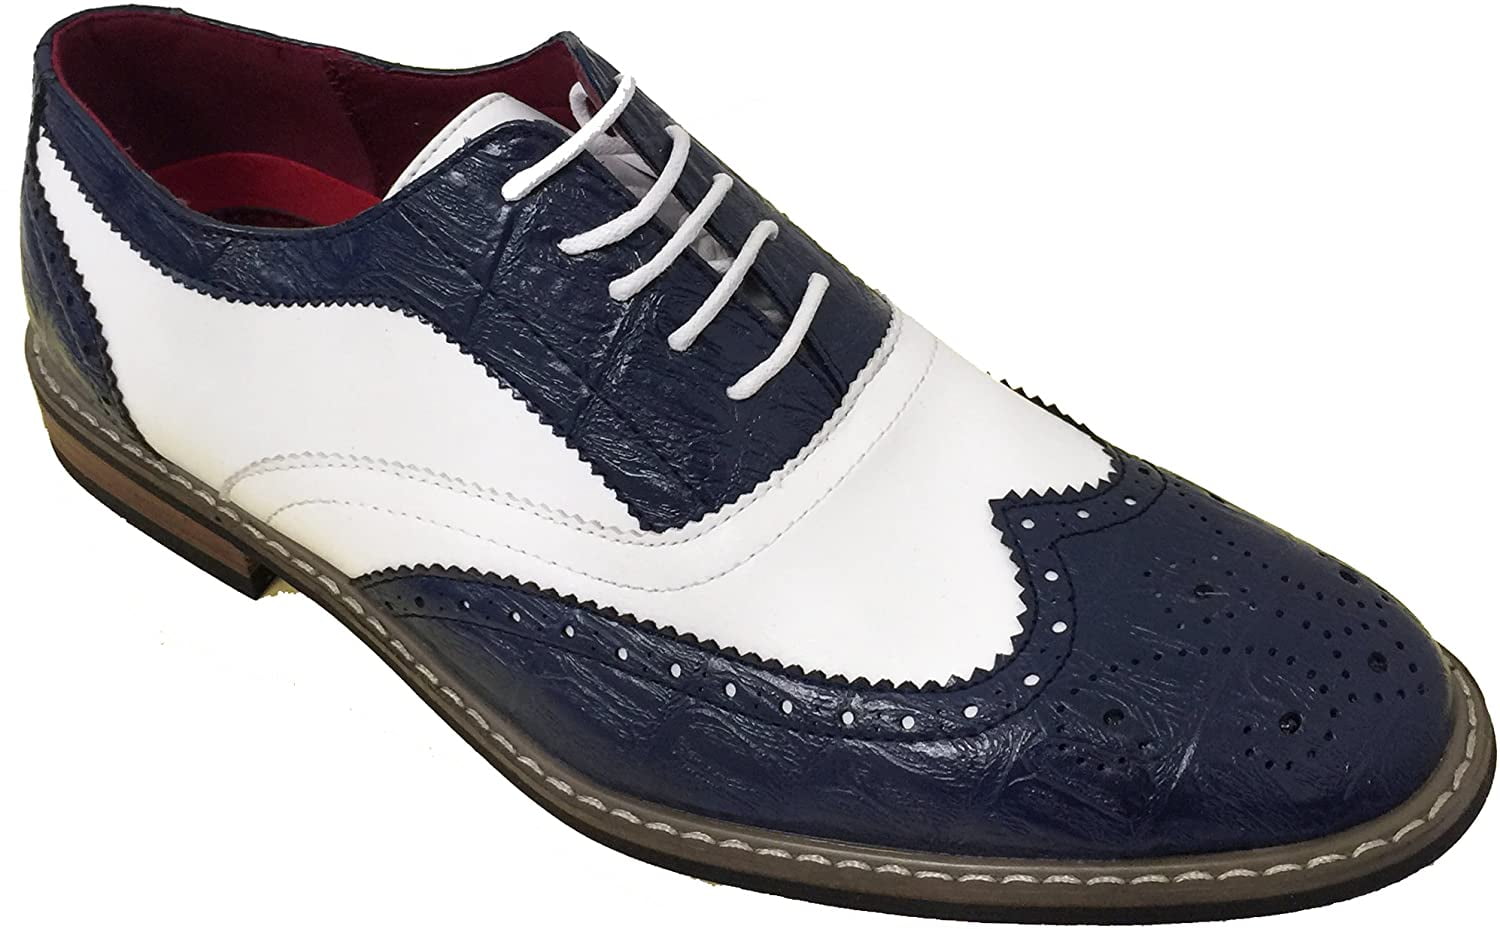 Men Brogue Slip On Pointy Toe Dress Formal Oxfords Tassel Loafers Wing Tip Shoes